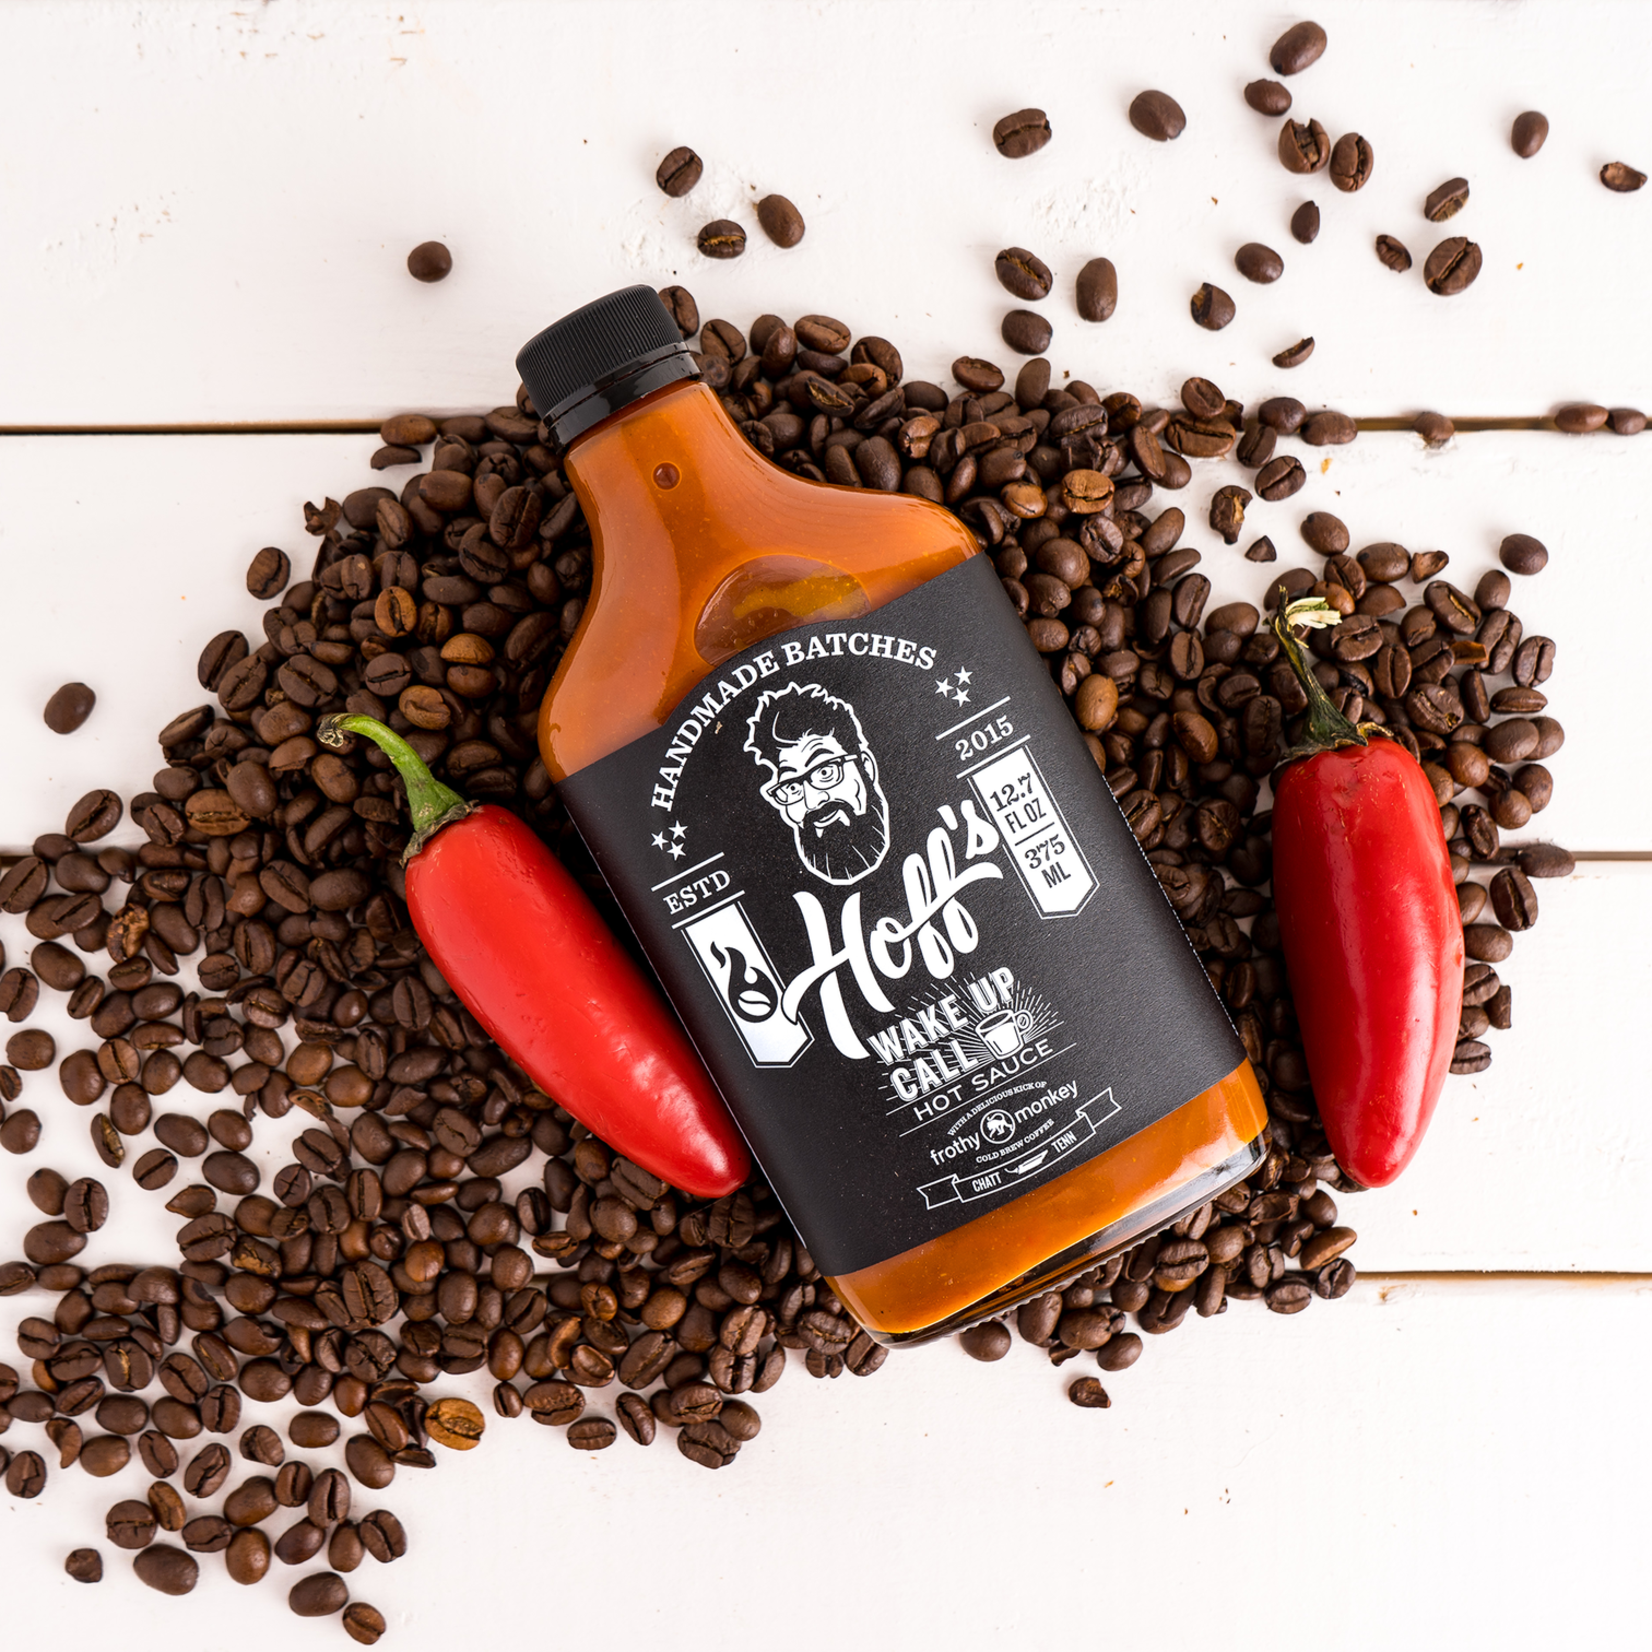 Hoff & Pepper Hoff Sauce - Wake Up Call Hot Sauce